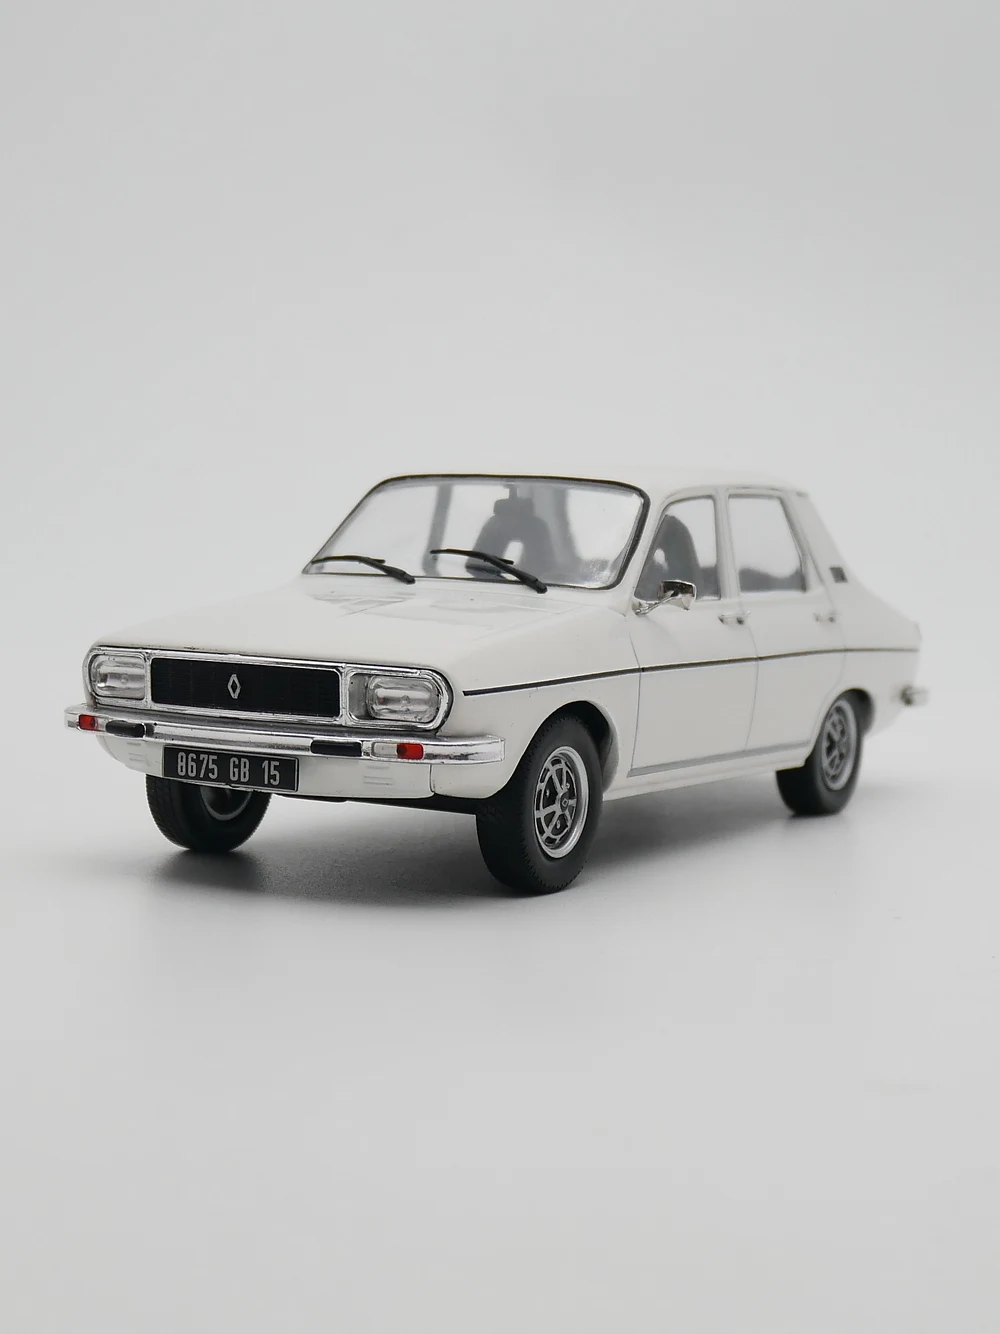 IXO 1:24 Hachette Fiat Panda 45 1980 Diecast Car Model Collect Metal Toy  Vehicle - AliExpress